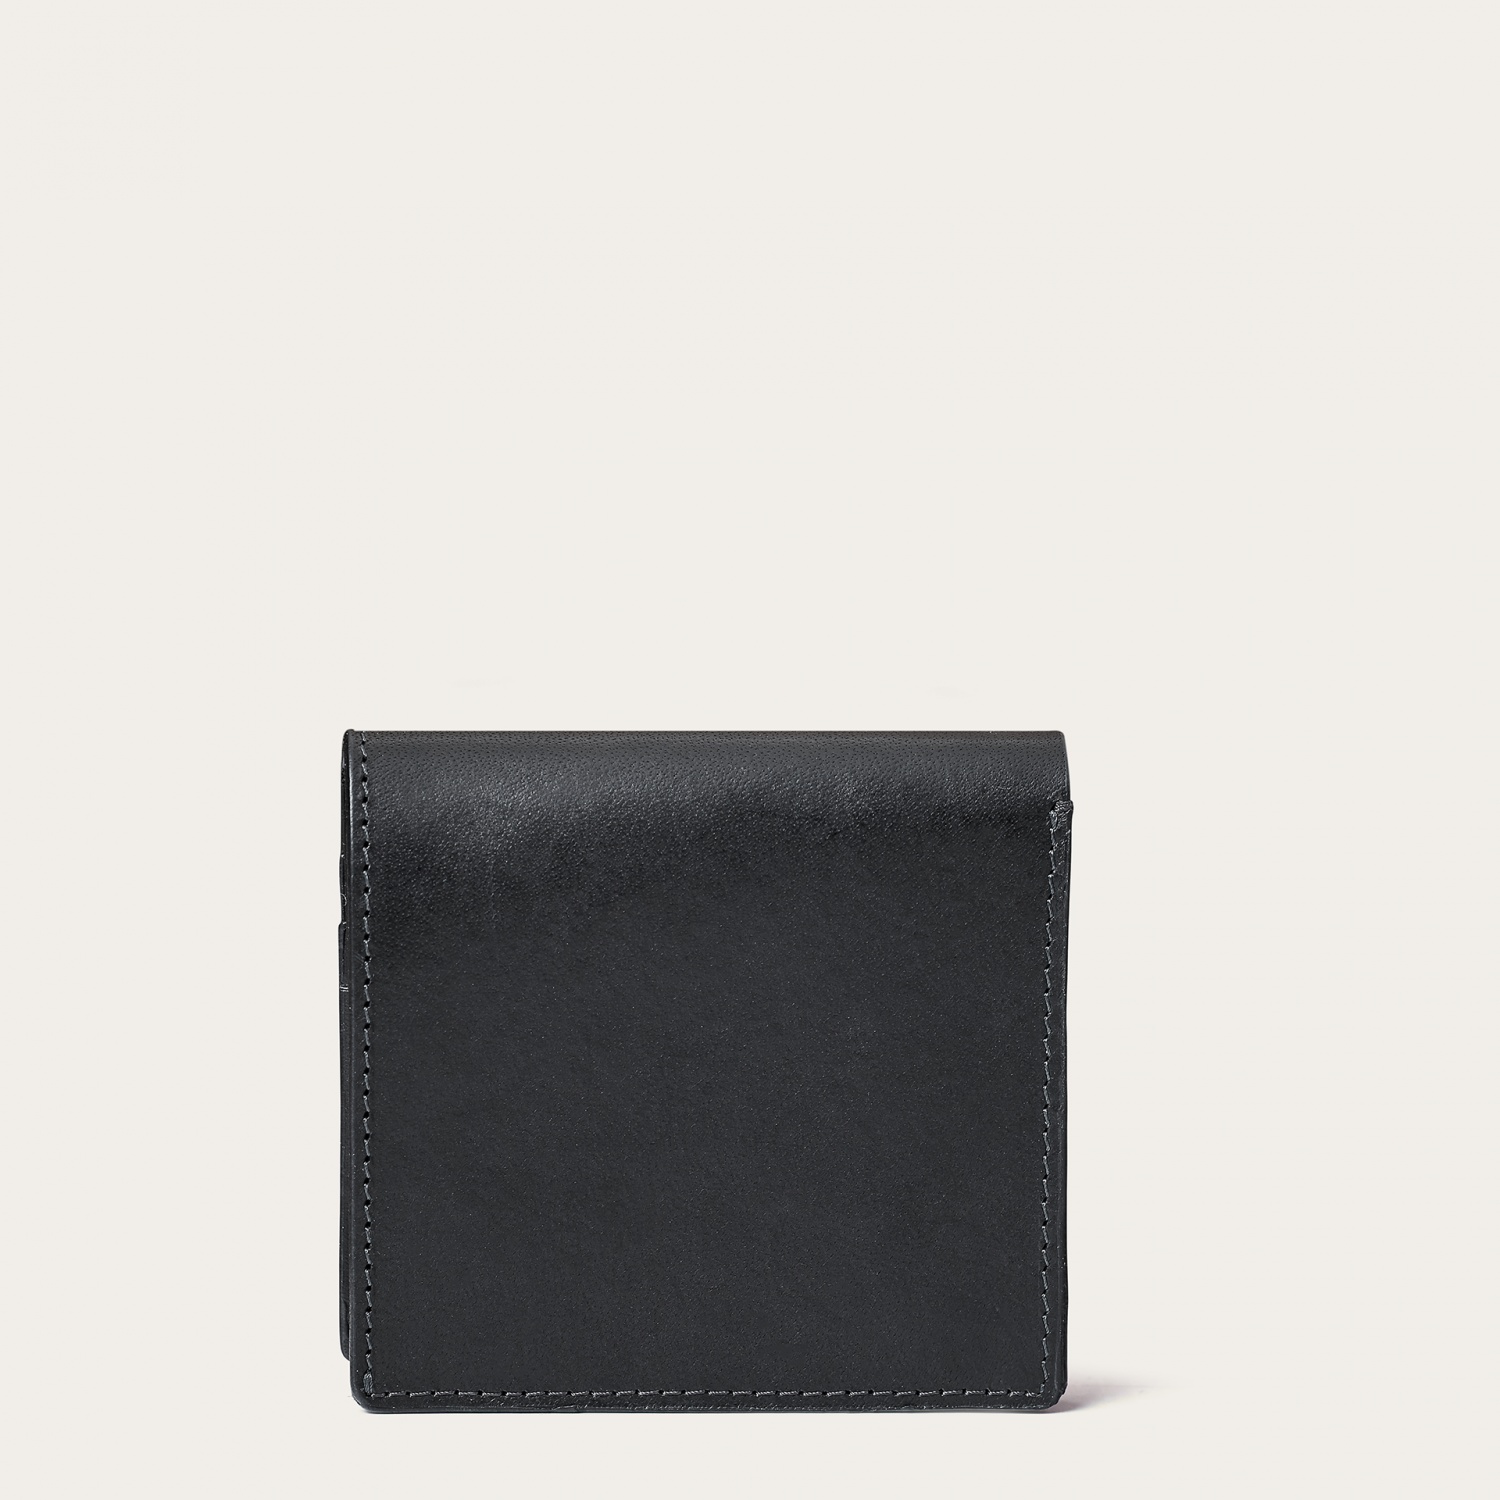  Adon wallet, black-5 